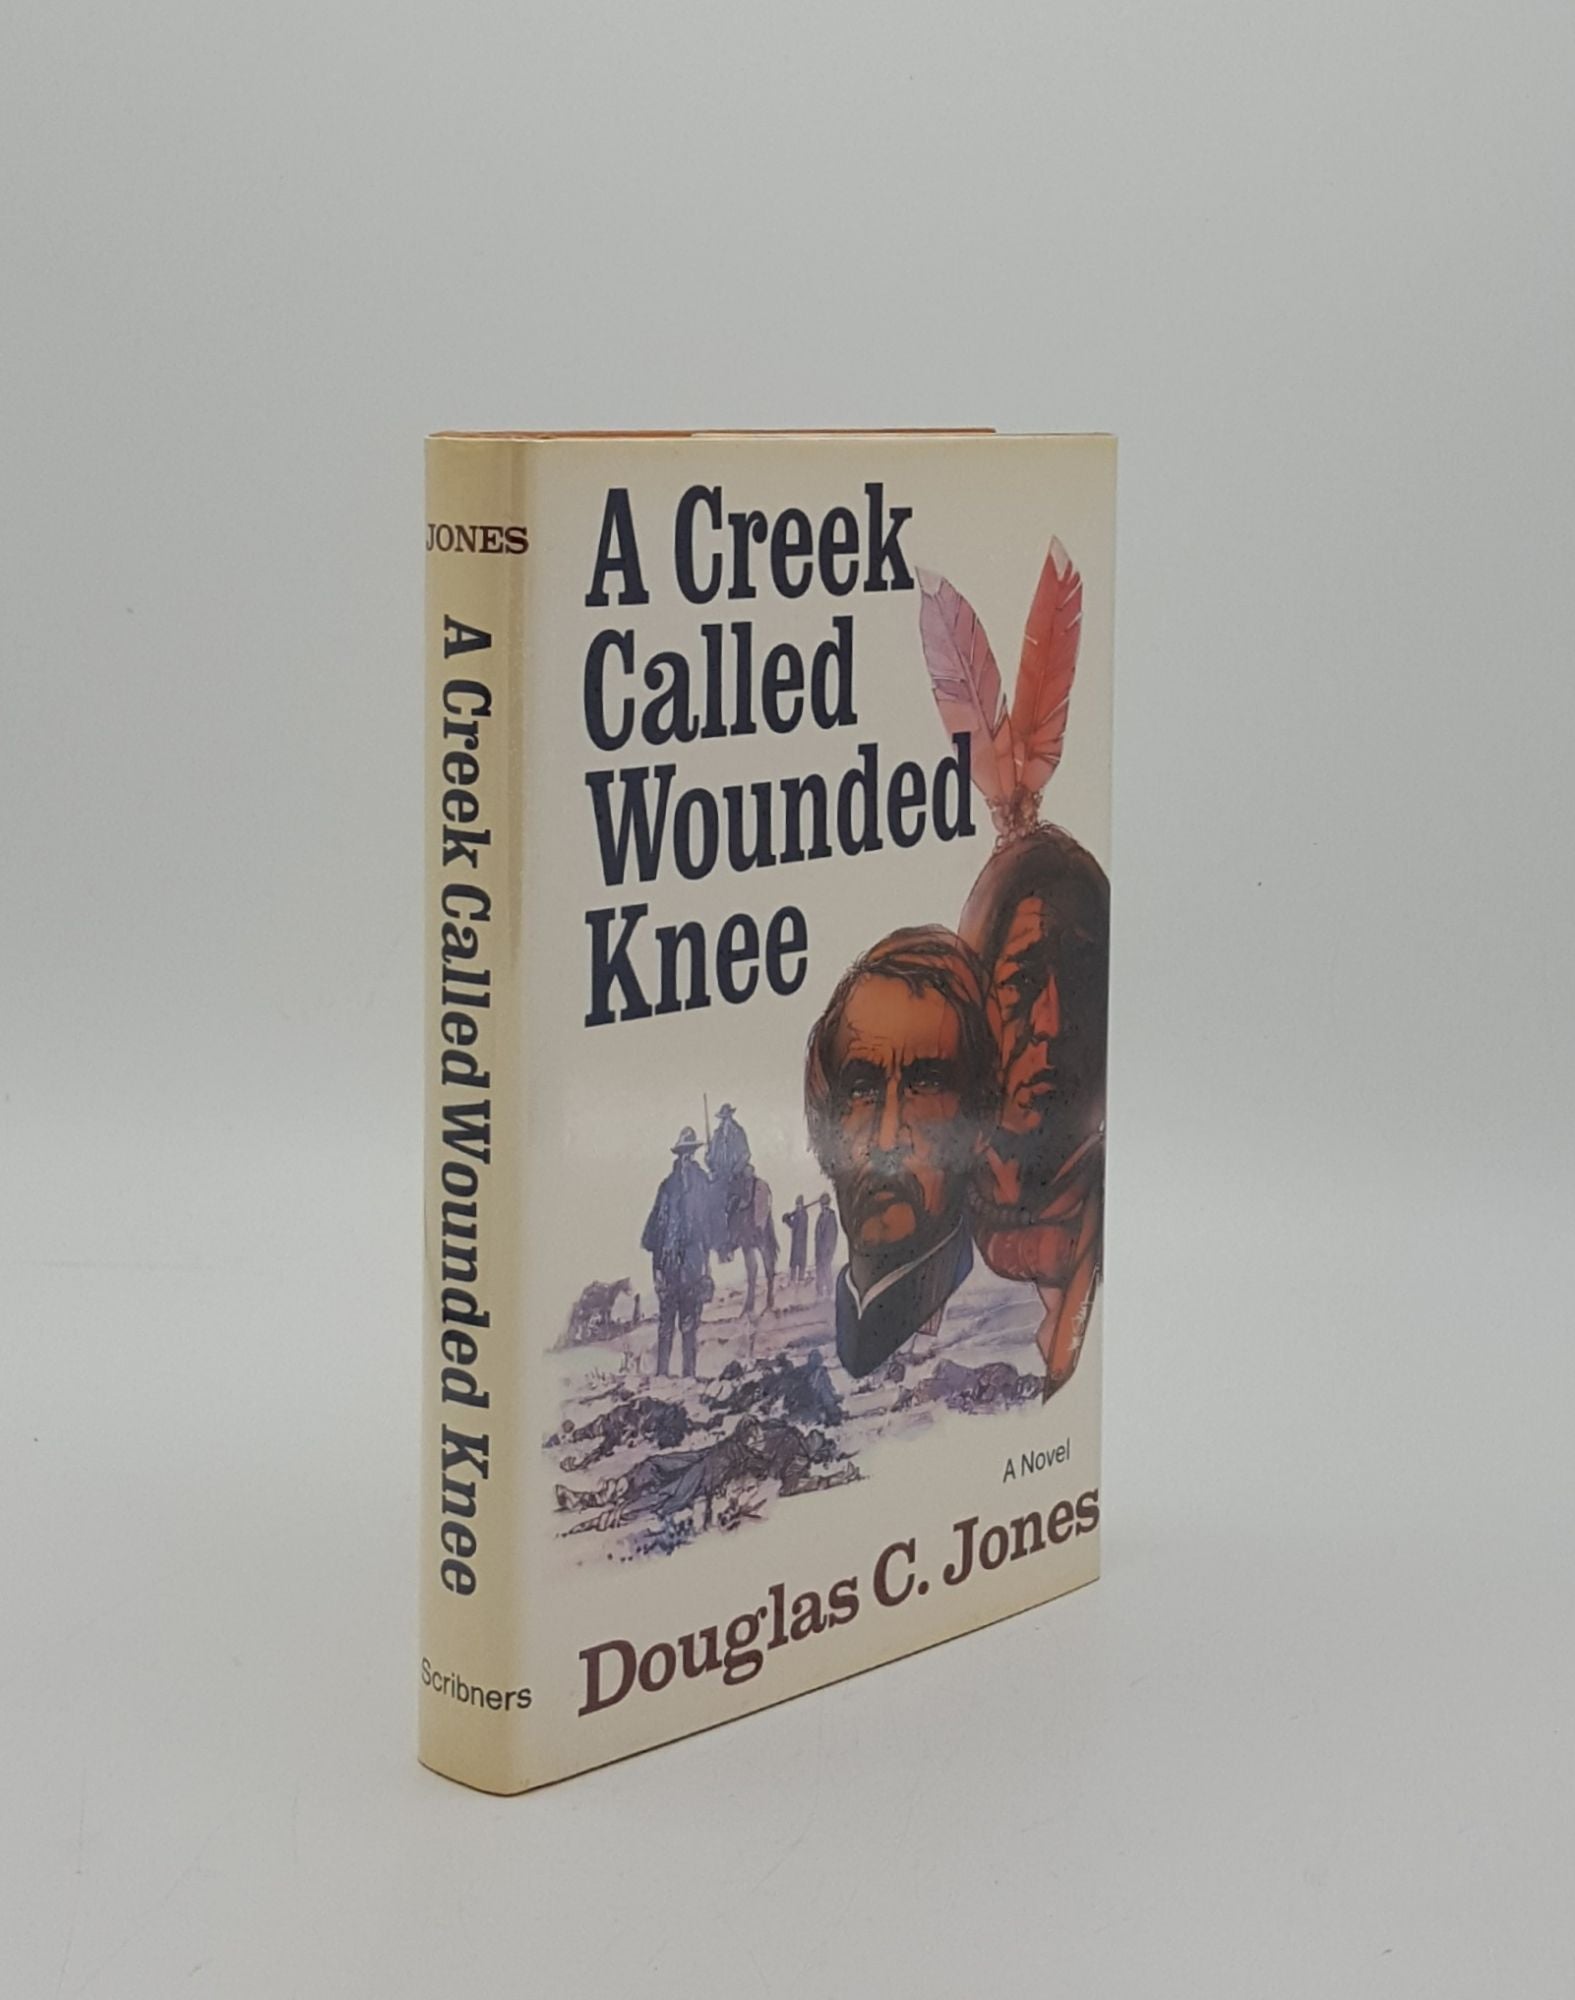 JONES Douglas C. - A Creek Called Wounded Knee